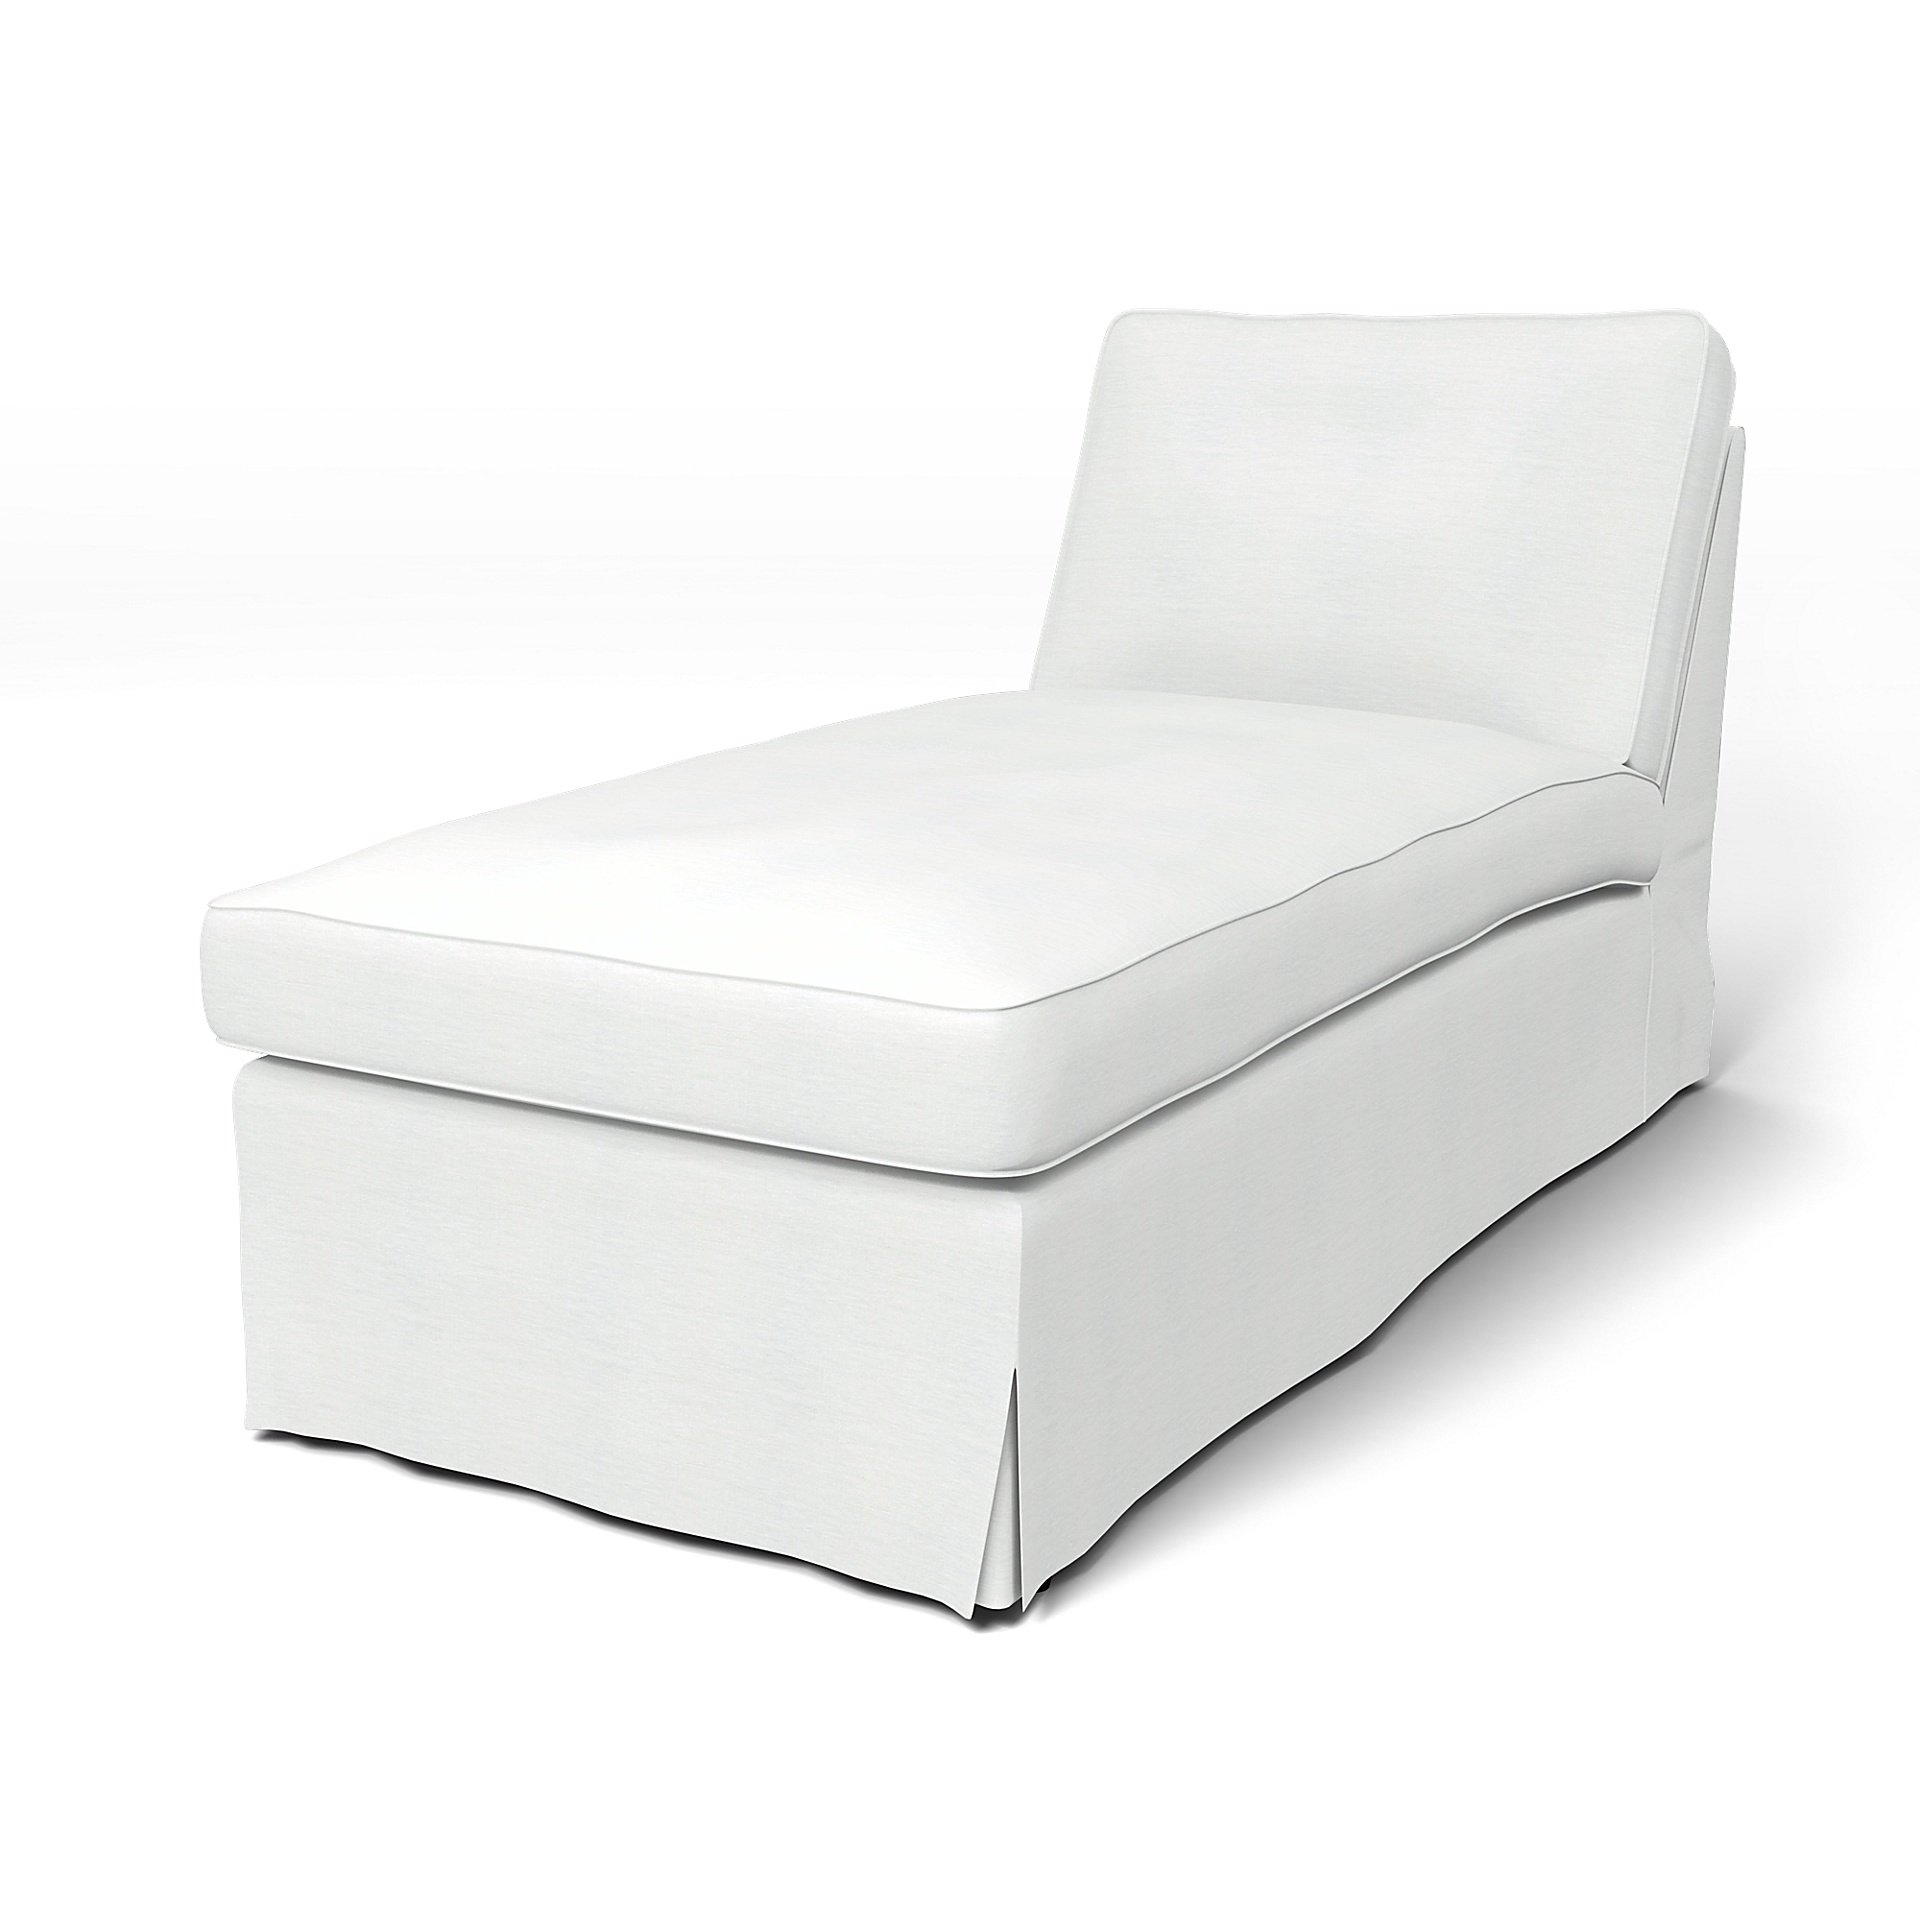 IKEA - Ektorp Chaise Longue Cover, White, Linen - Bemz